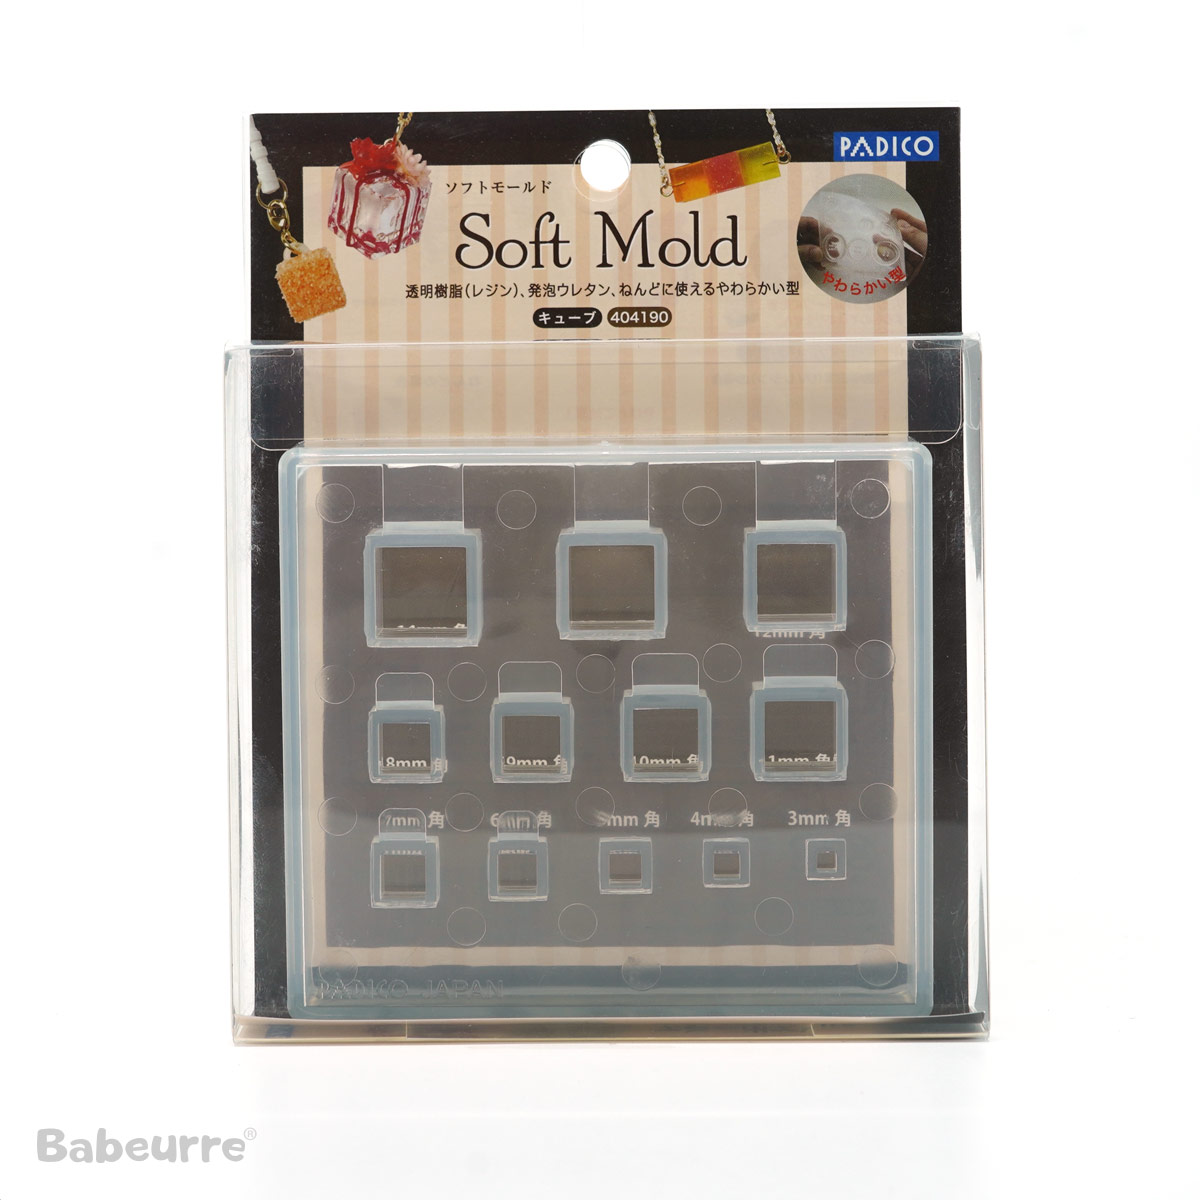 Soft Mold Cube